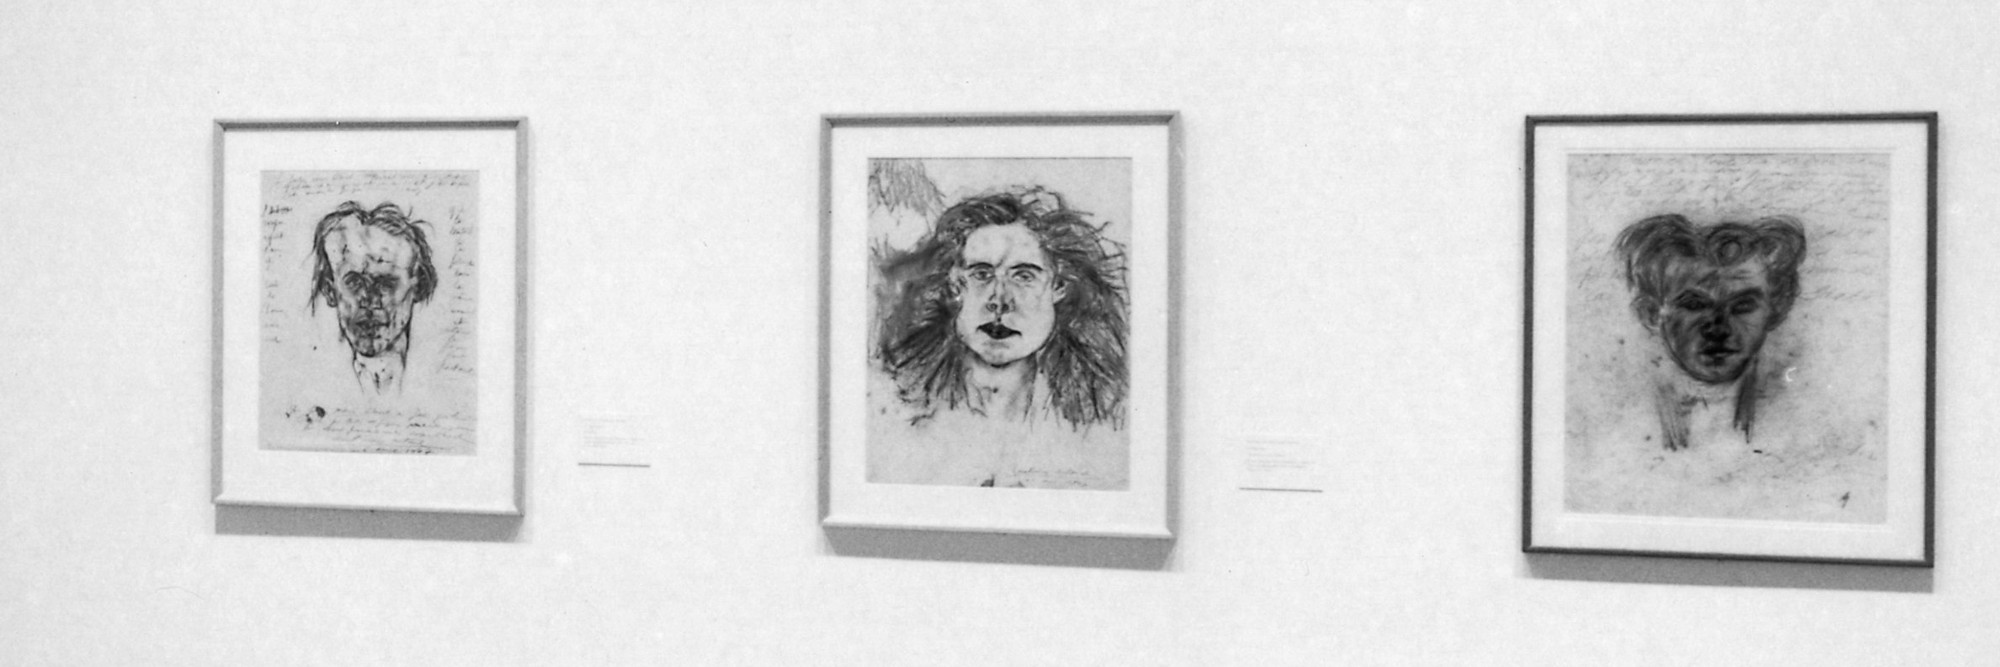 Installation view of Antonin Artaud: Works on Paper at The Museum of Modern Art, New York. Photo: Erik Landsberg